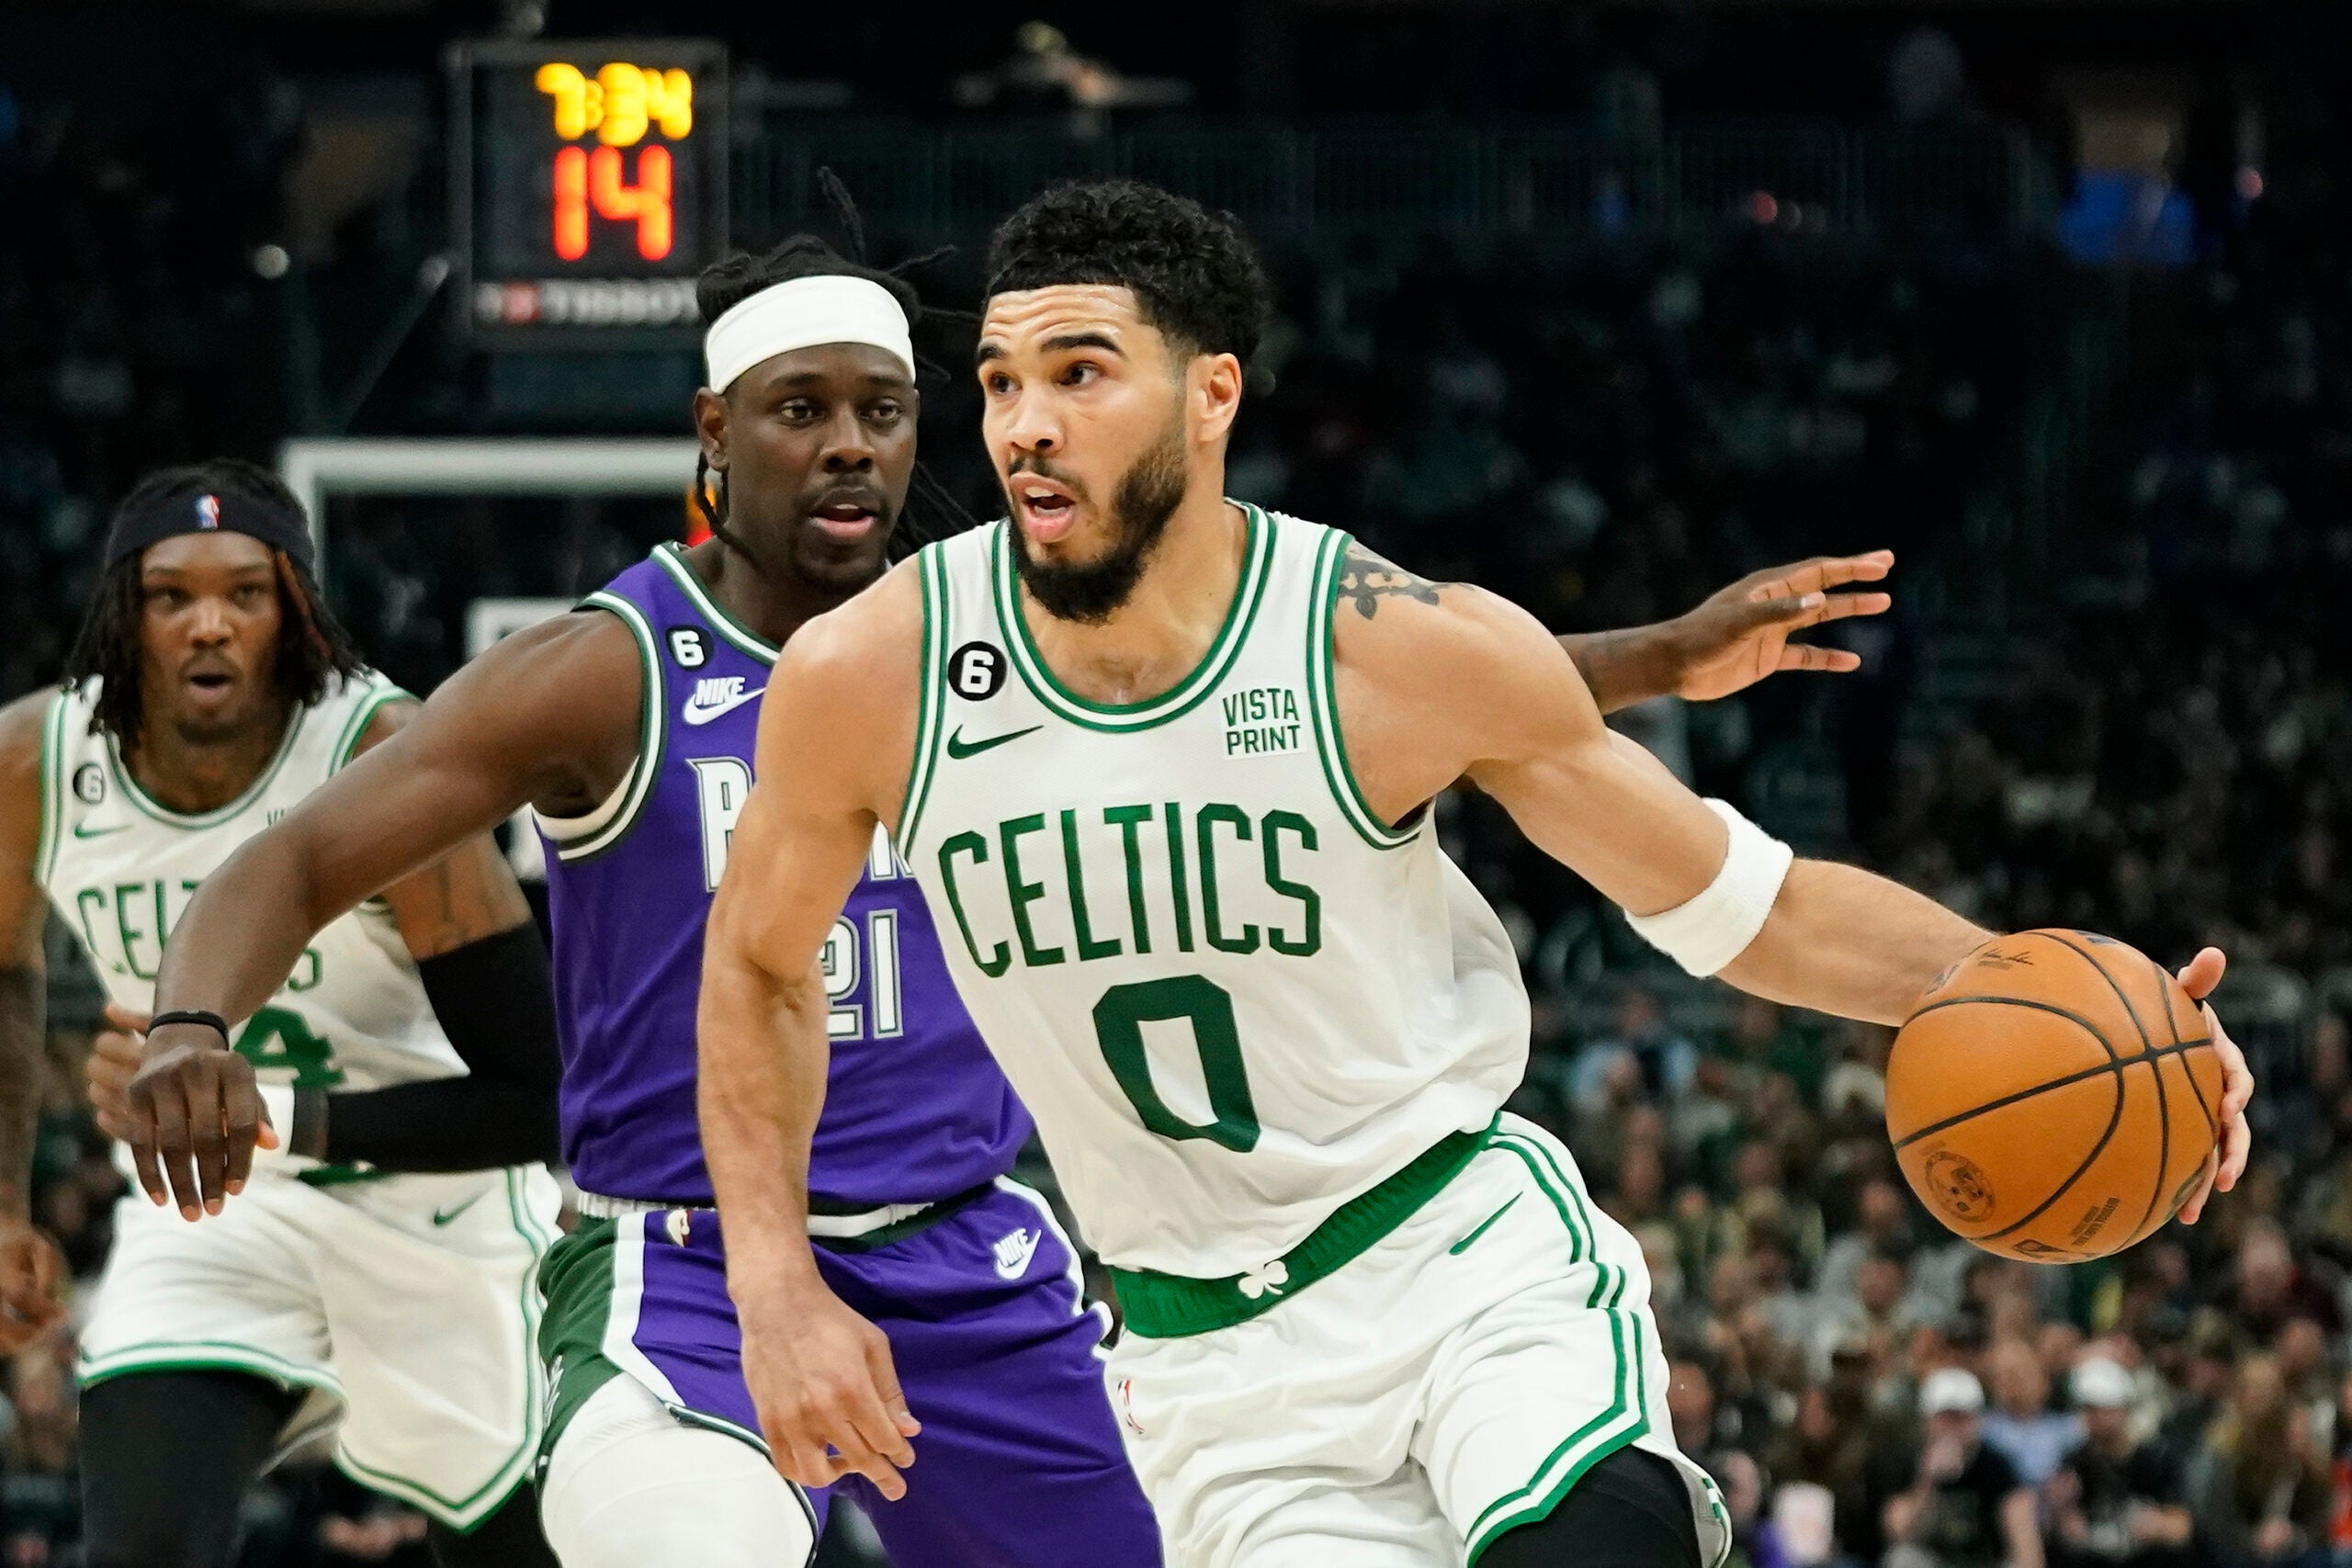 The Celtics Jayson Tatum drives to the basket.